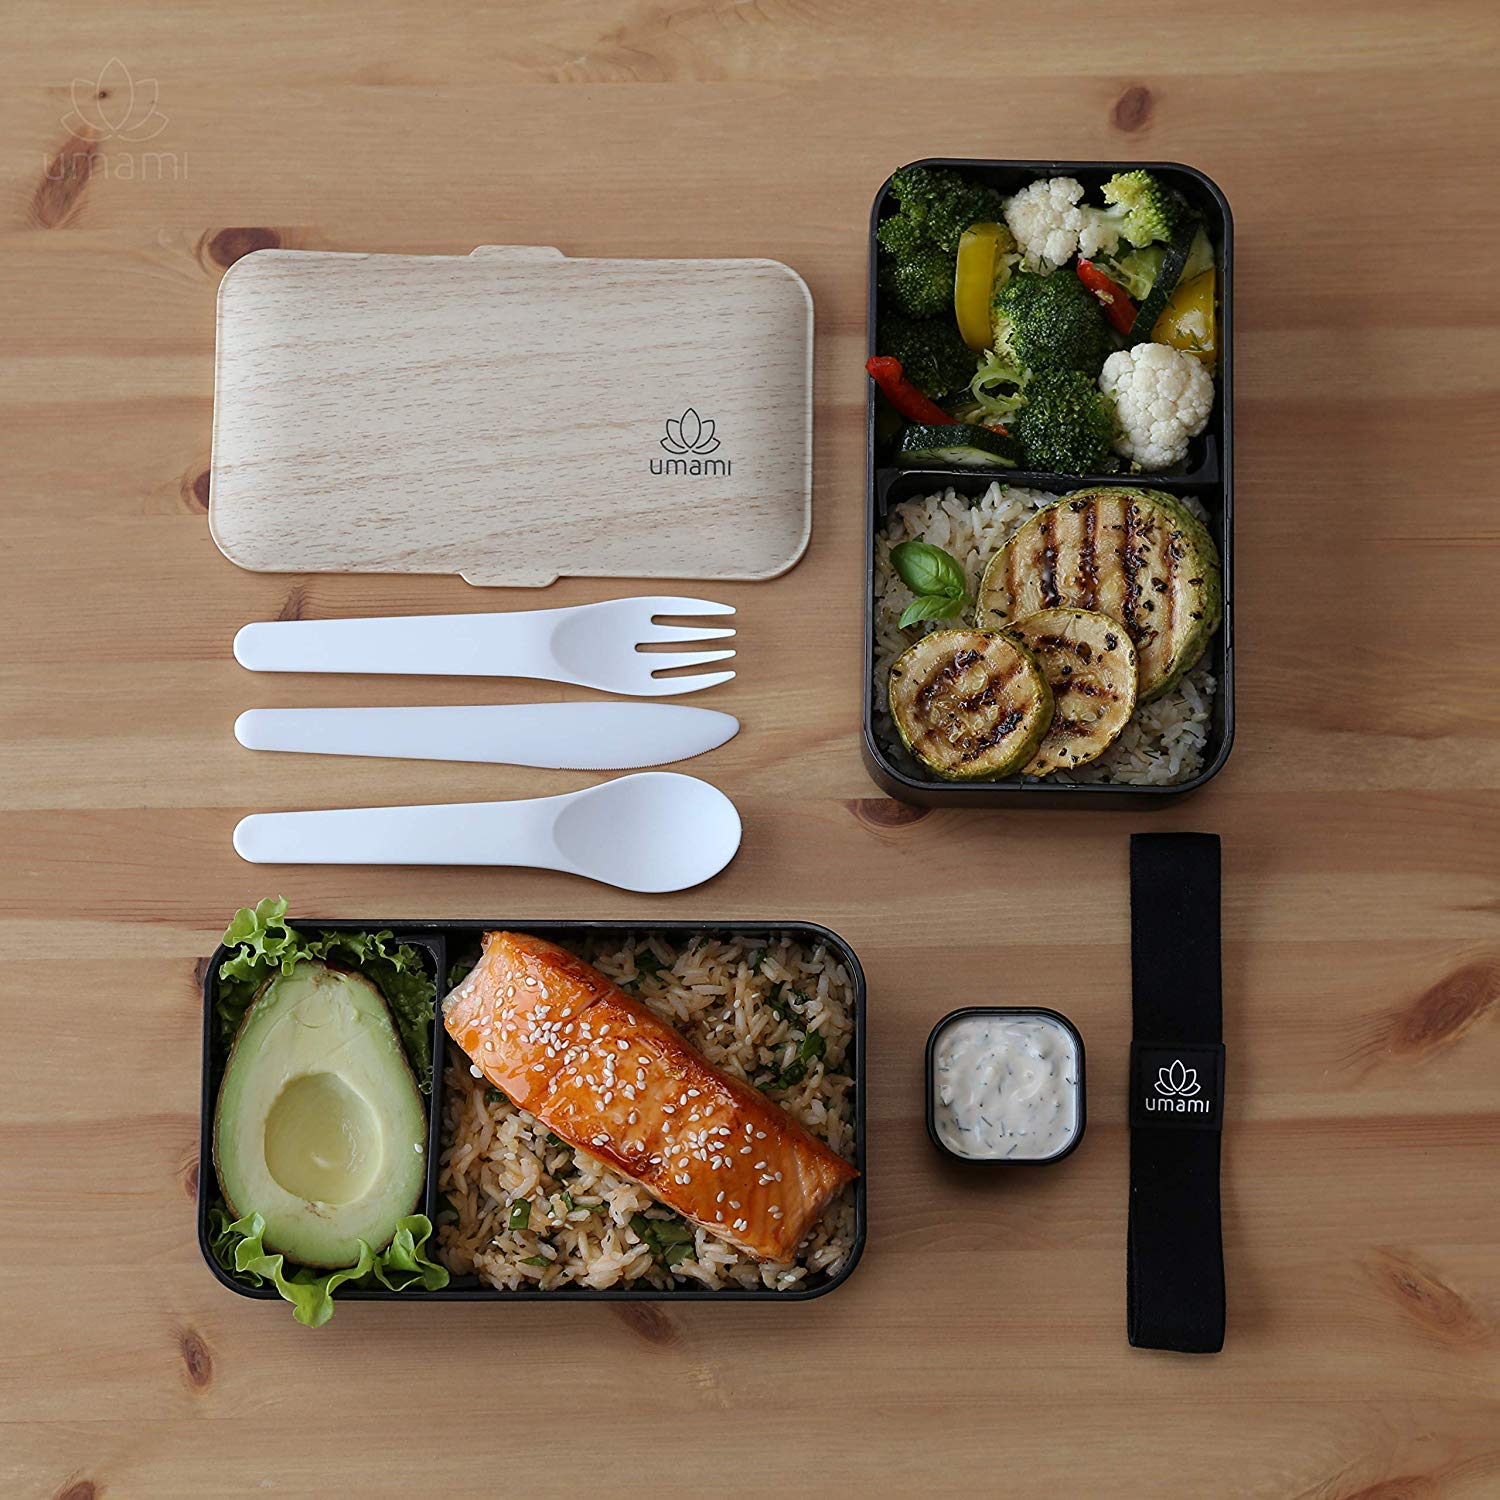 Lunchbox Umami : Test, avis et conseils d'achat